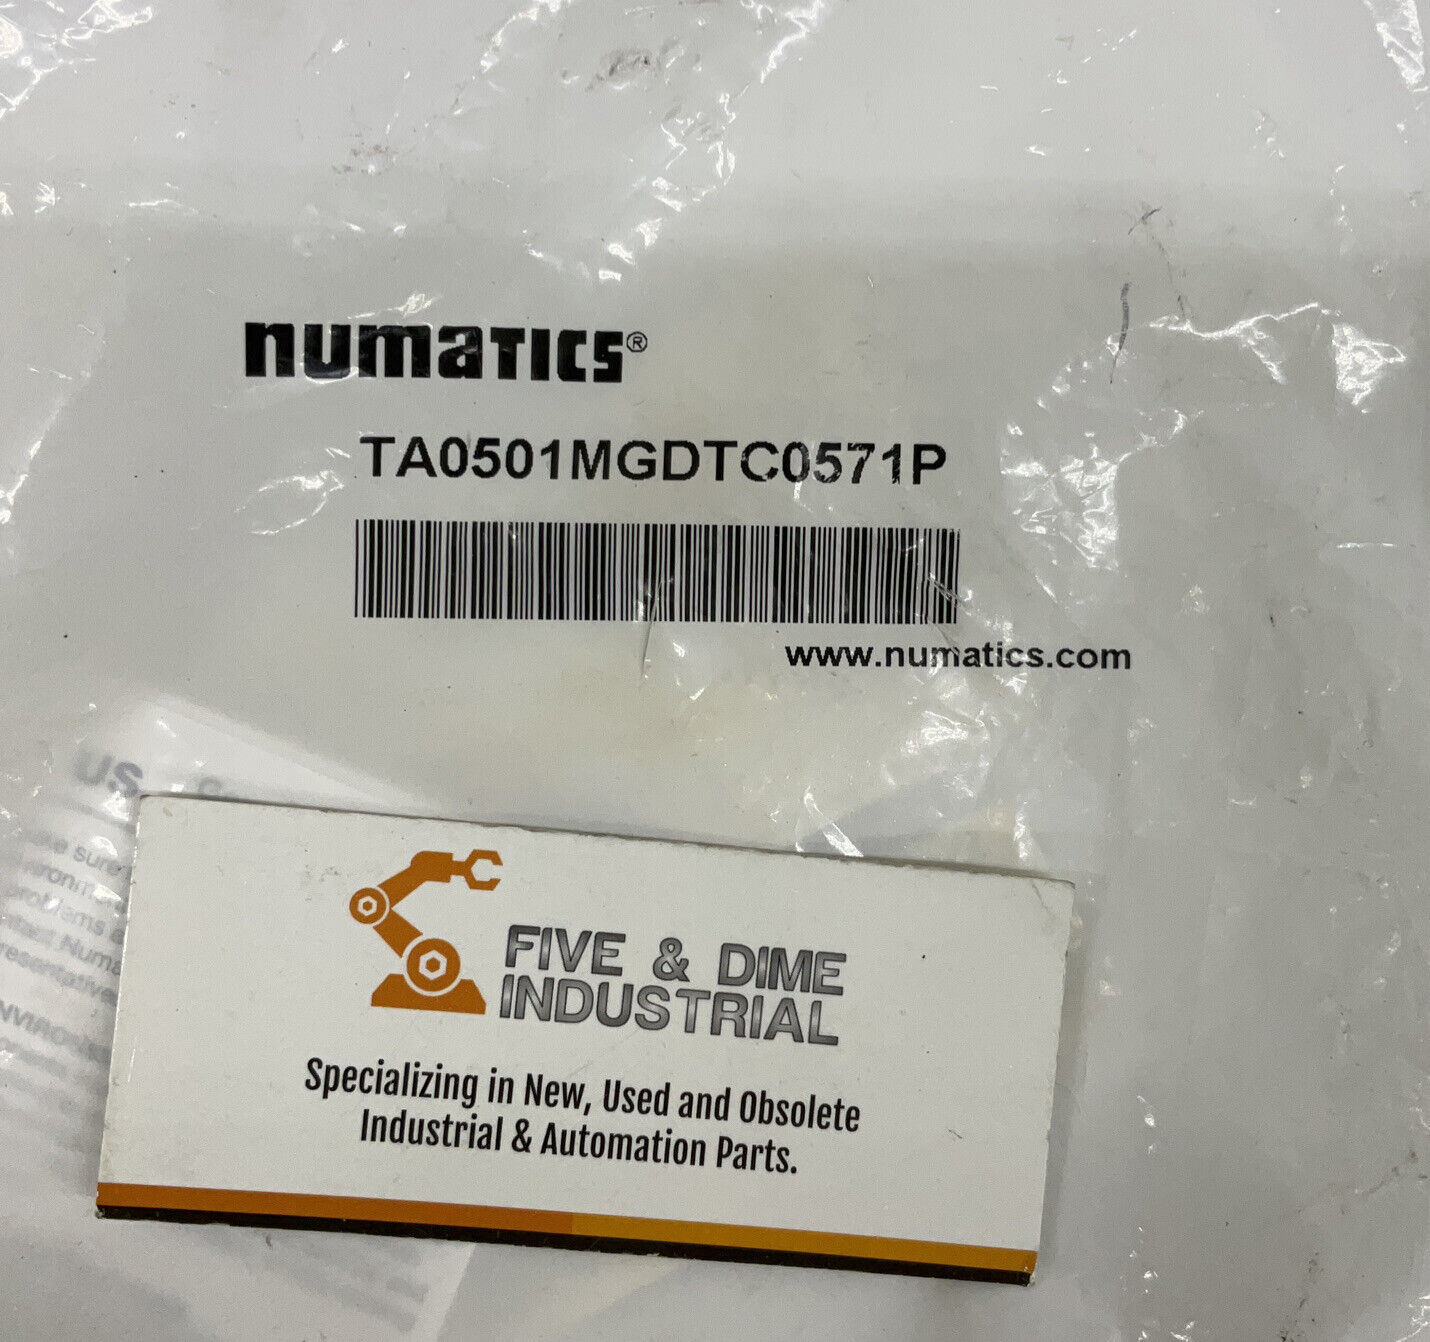 Numatics TA0501MGDTC0571P Sub-bus Cable 1m G3 (CBL120)